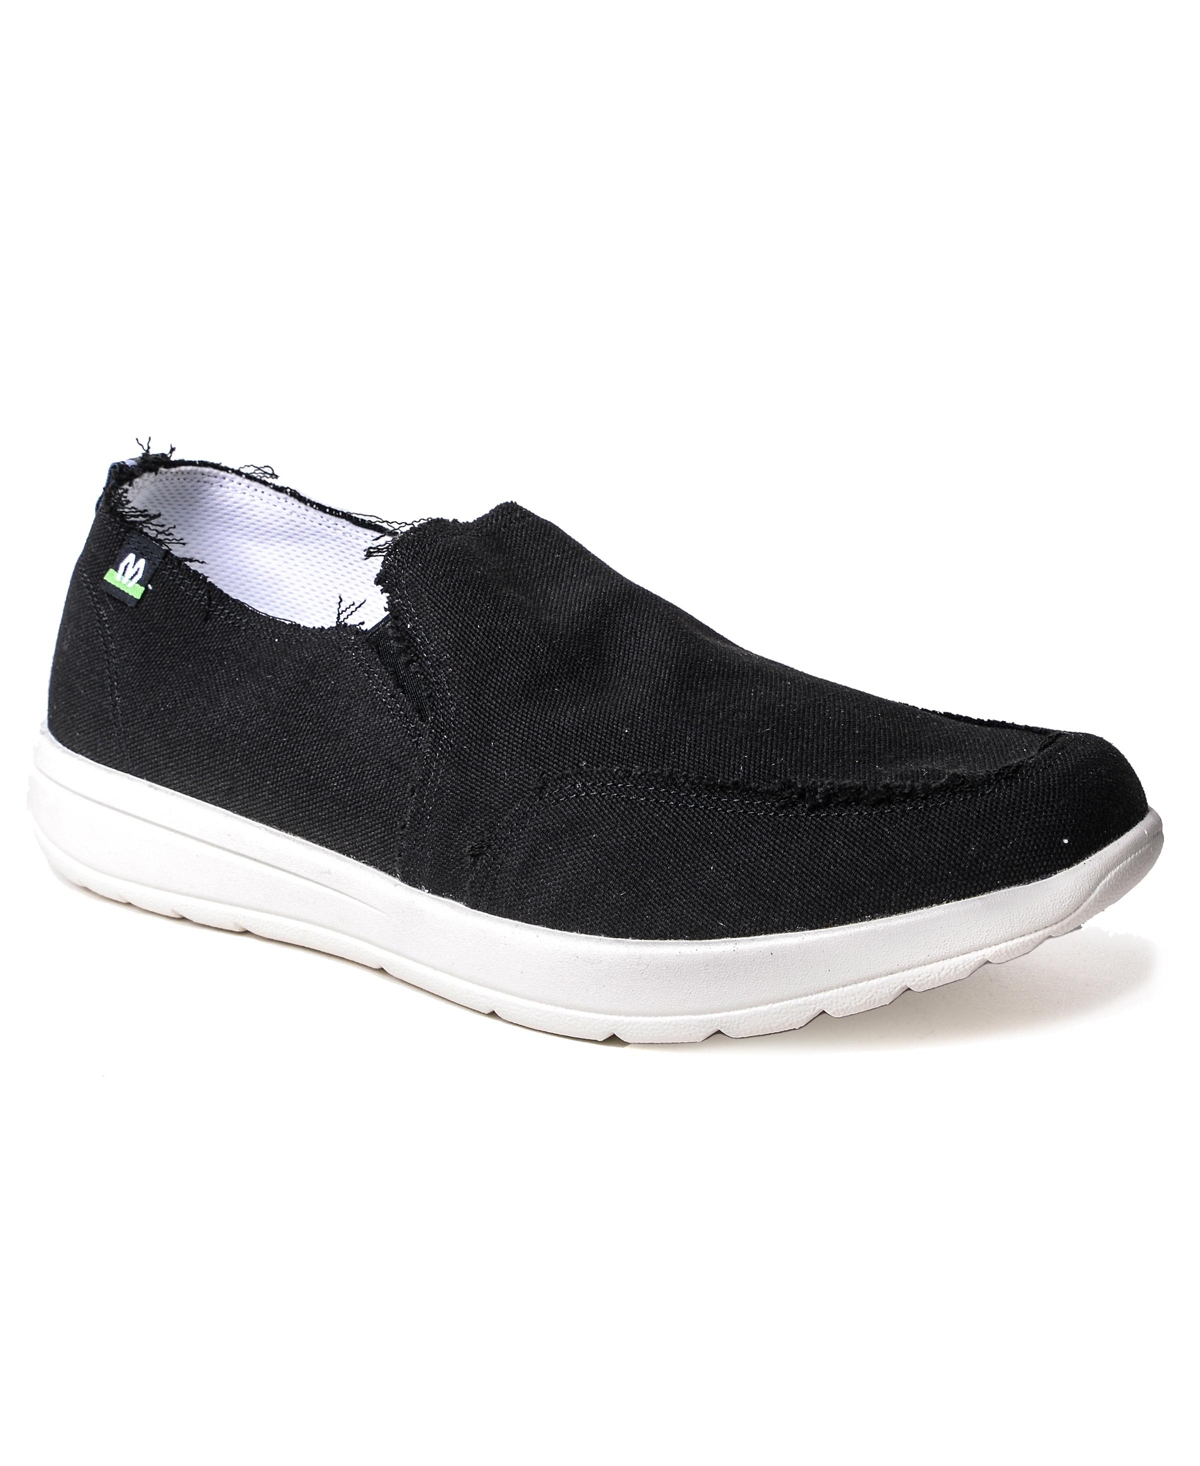 Men's Expanse Slip-on Shoes - Black